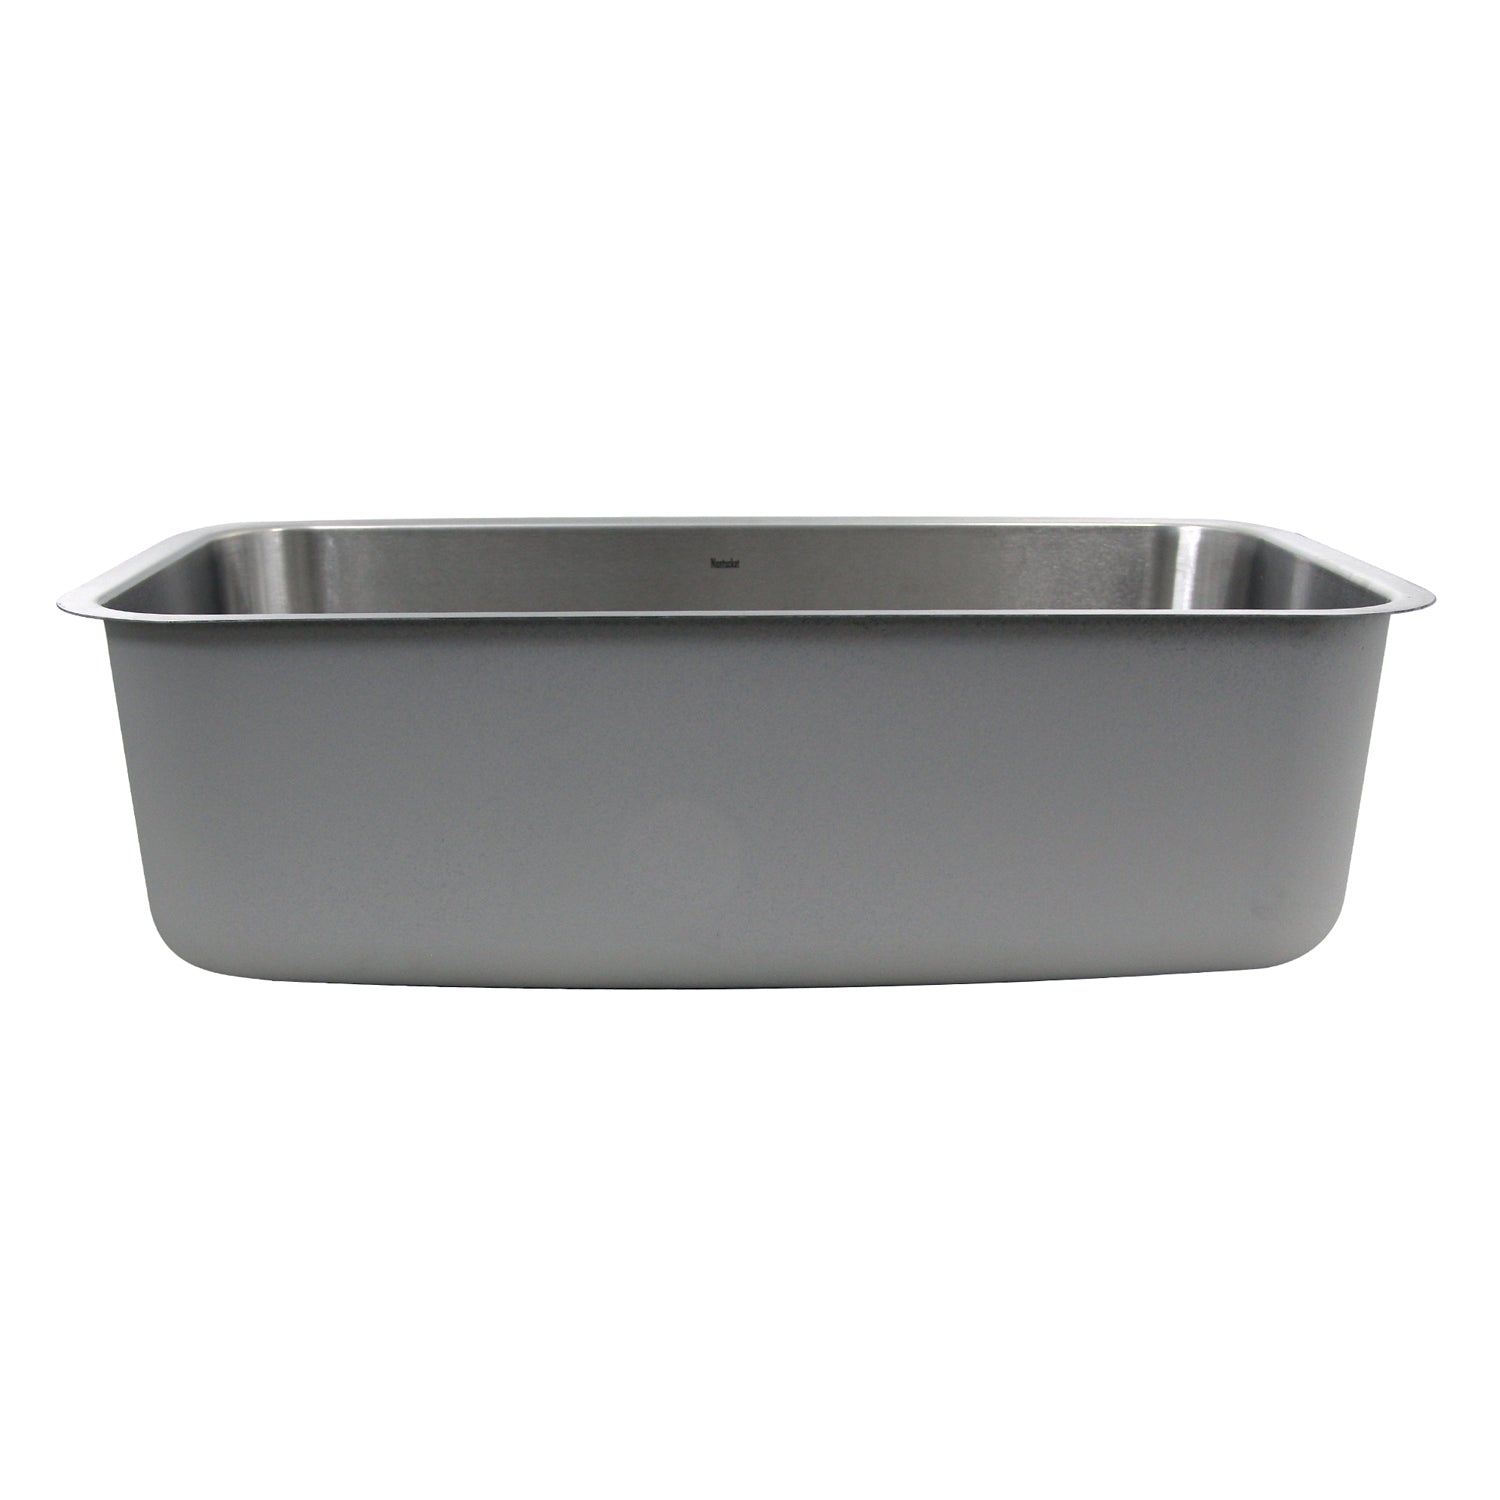 Nantucket Sinks NS3018-10-16 30" Large Rectangle Single Bowl Undermount Stainless Steel Kitchen Sink, 10" Deep